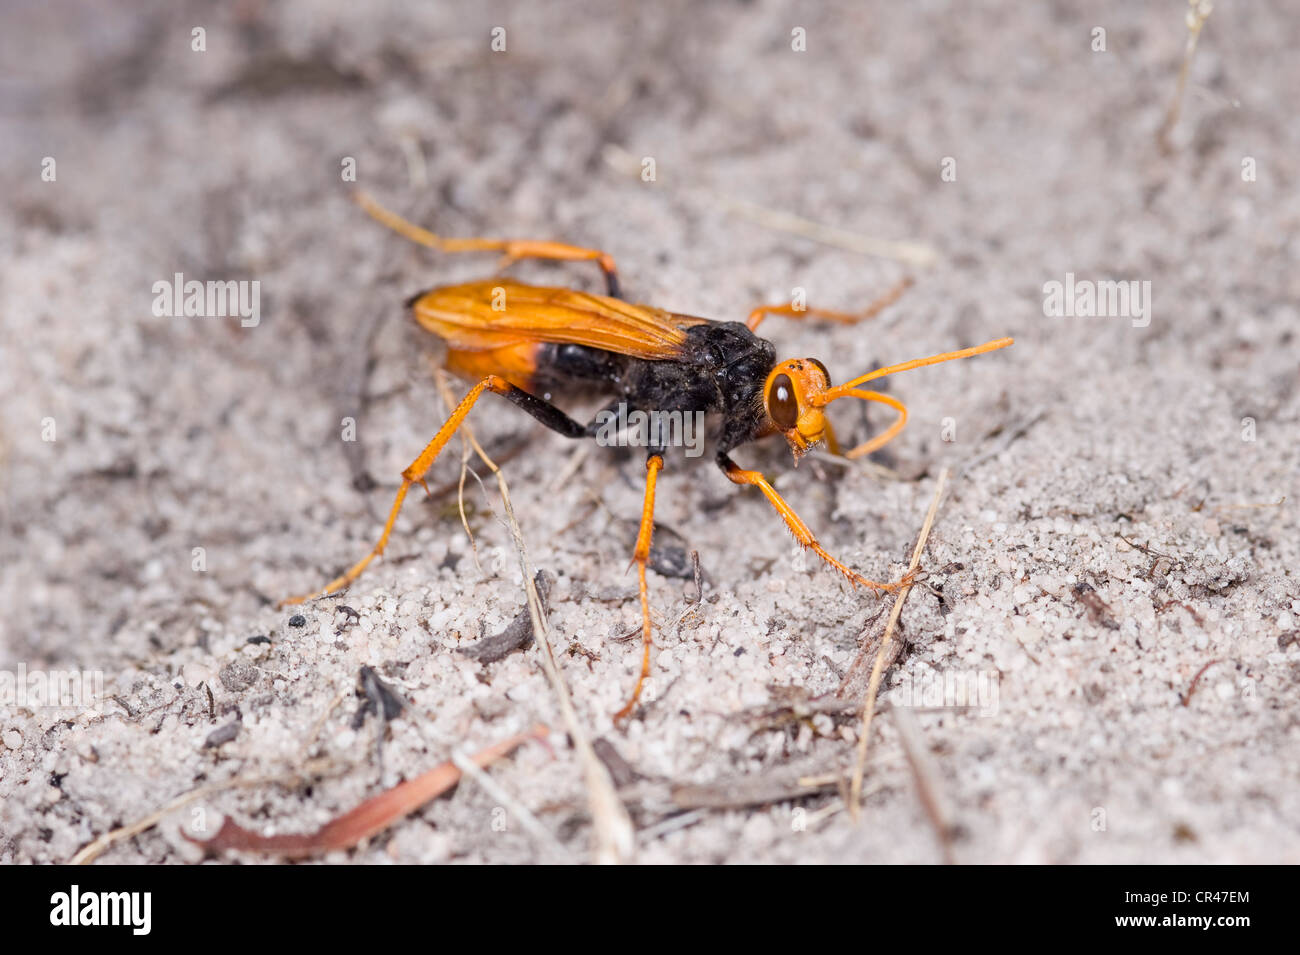 Orange and black spider hunting wasp Stock Photo